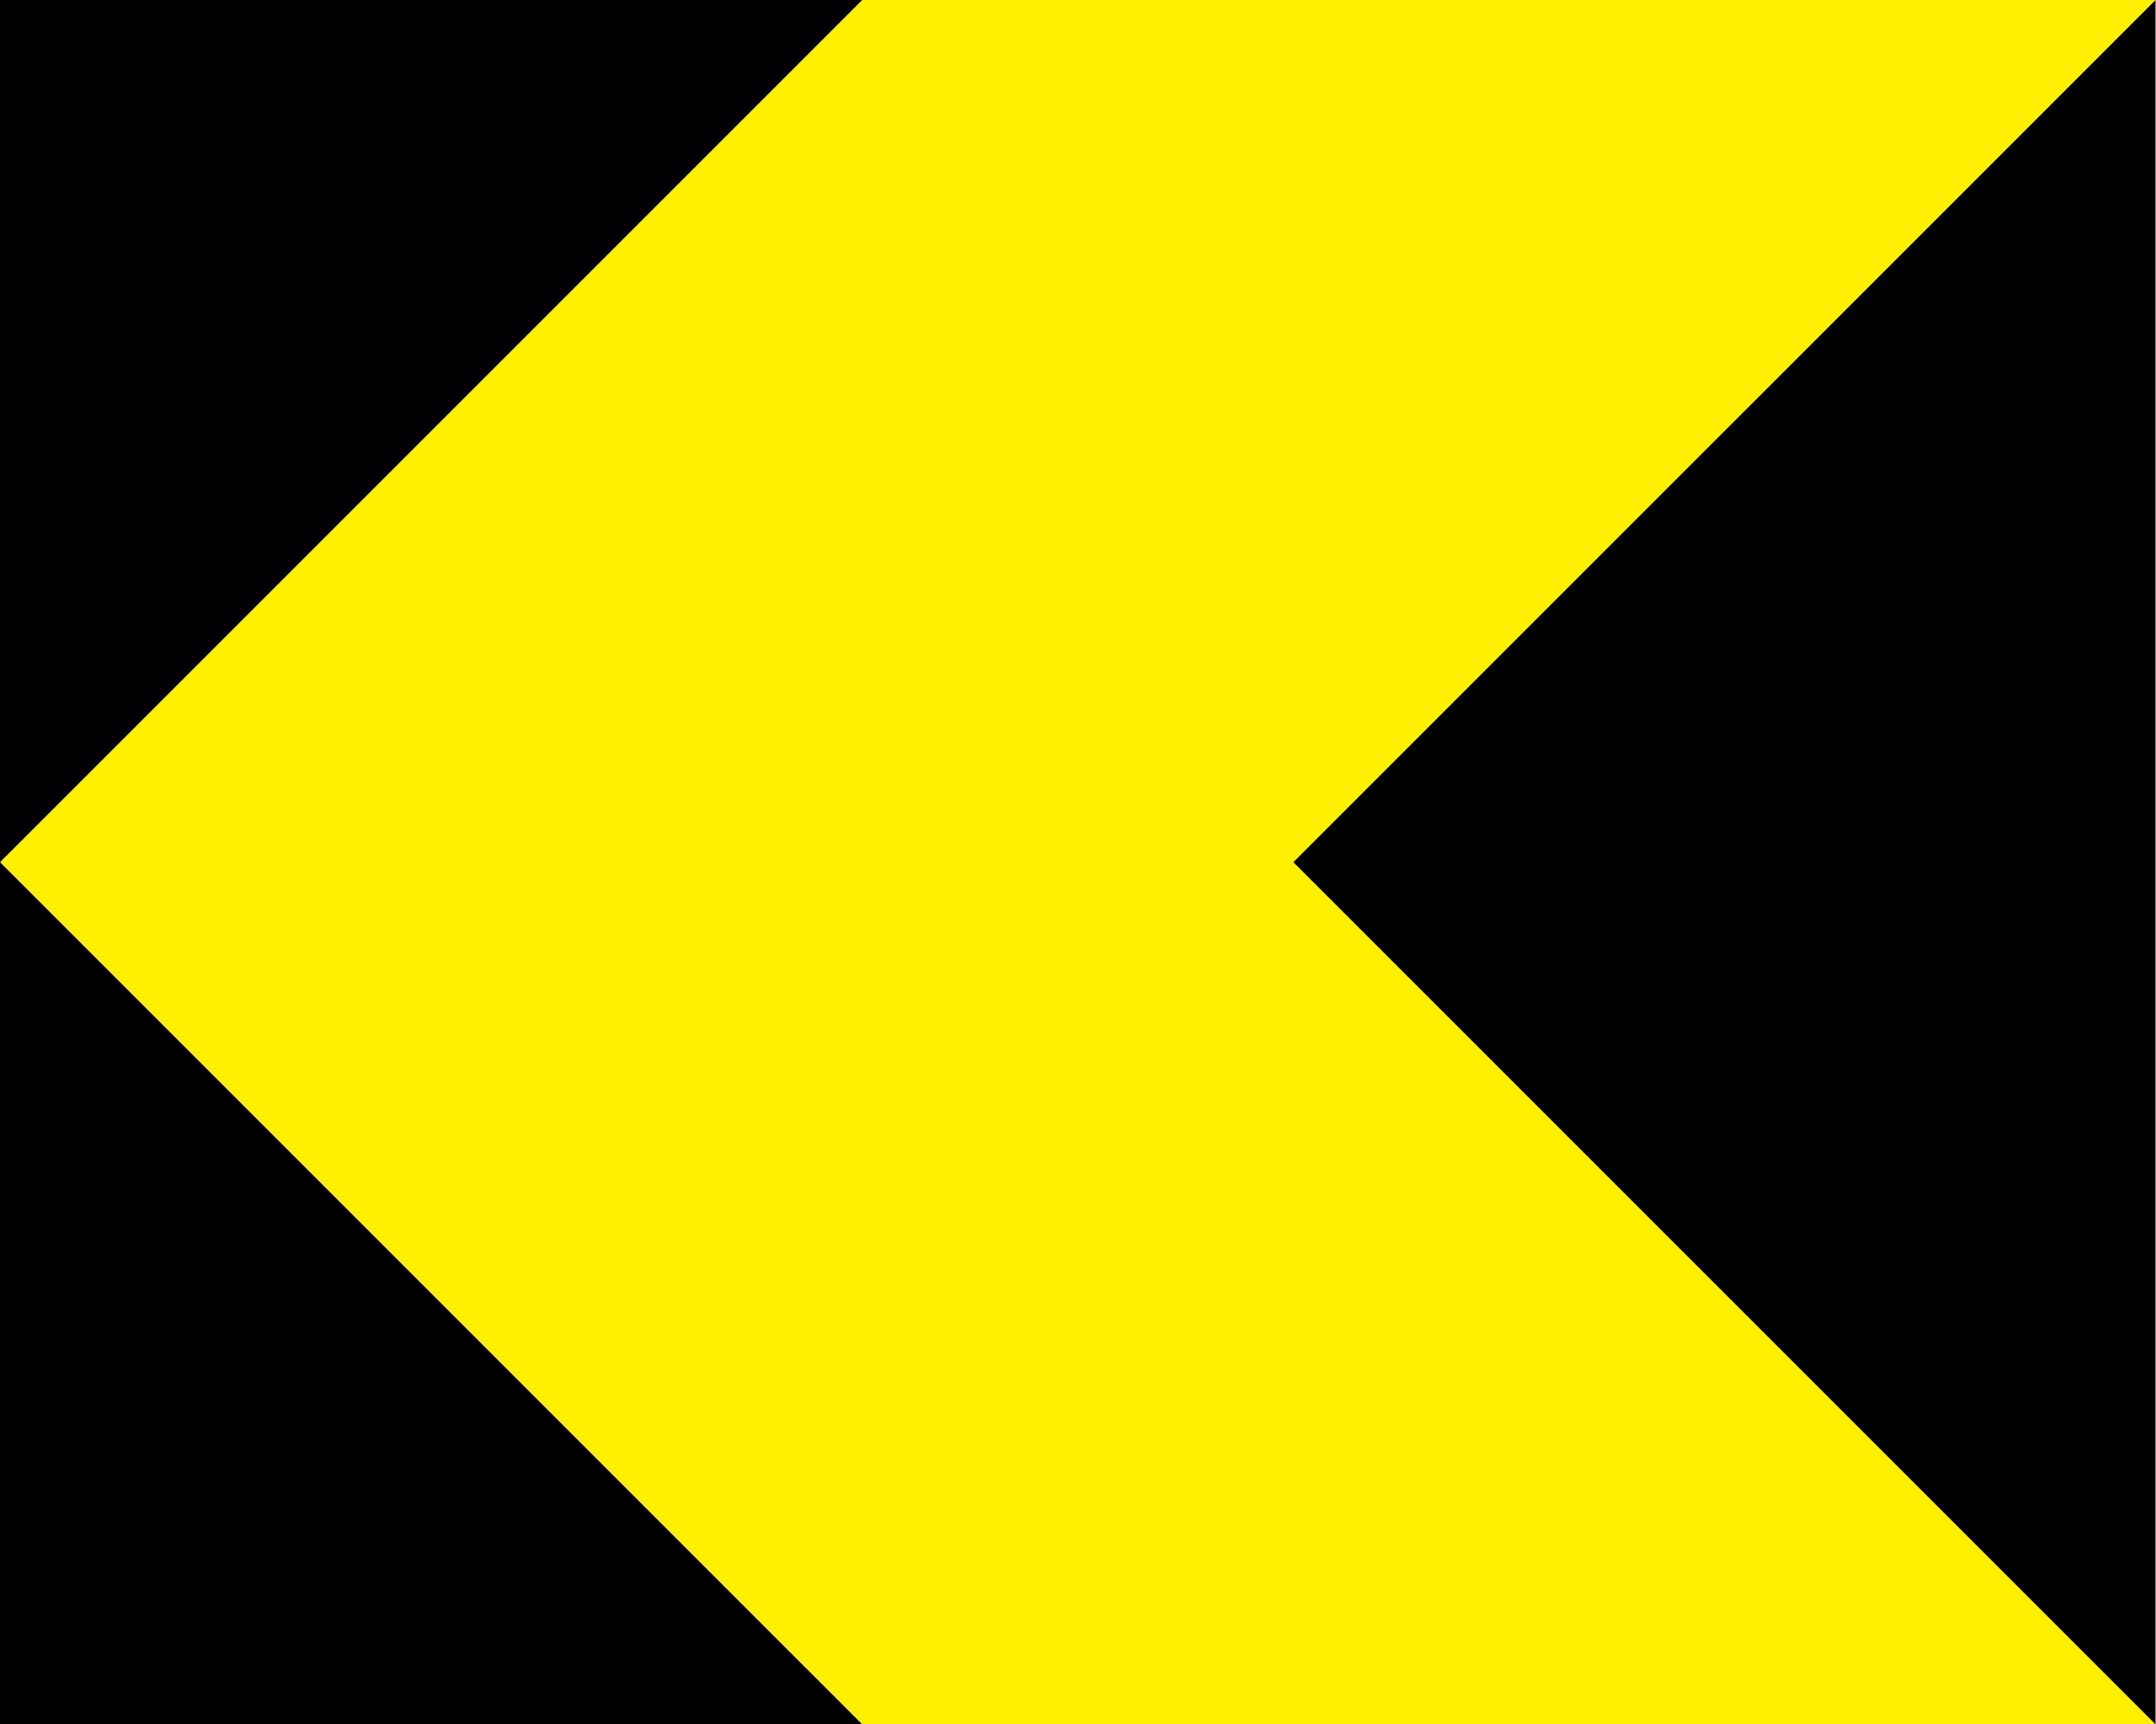 File:IE road sign W-061-L.svg - Wikipedia